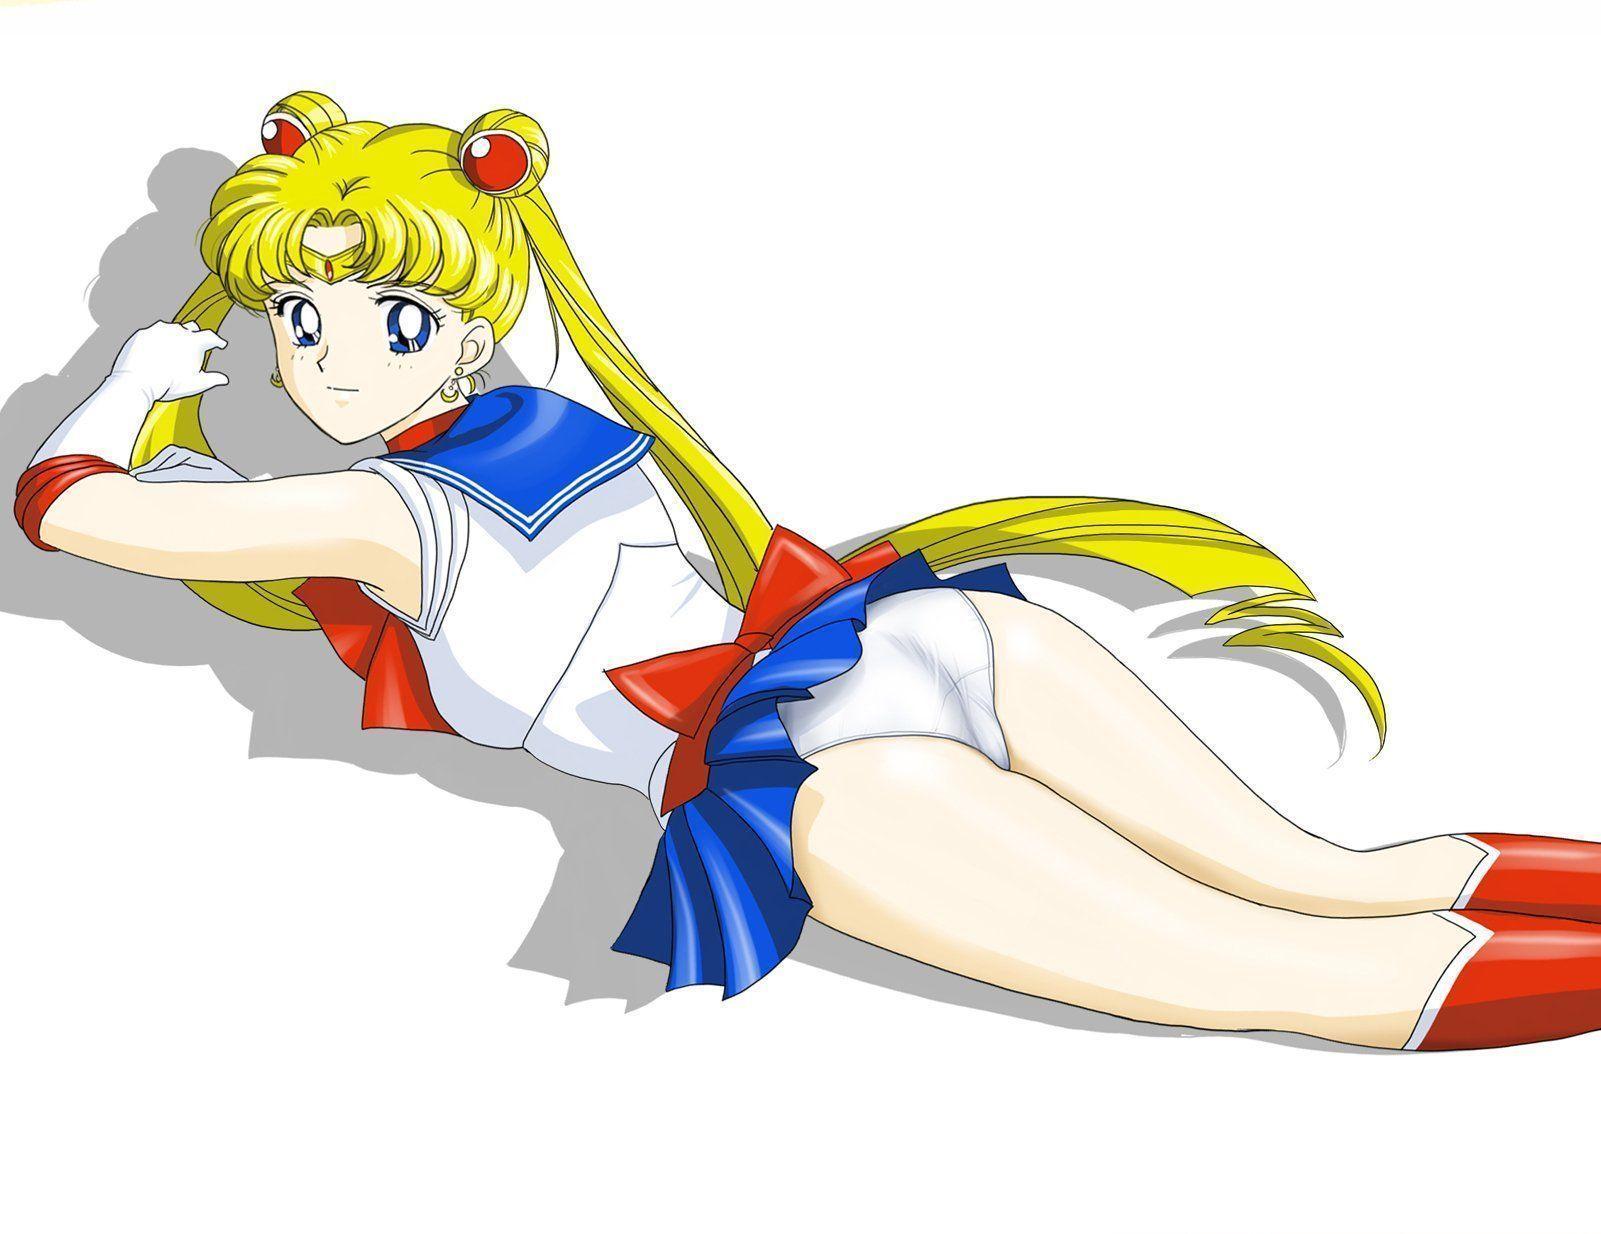 Sailor moon upskirt